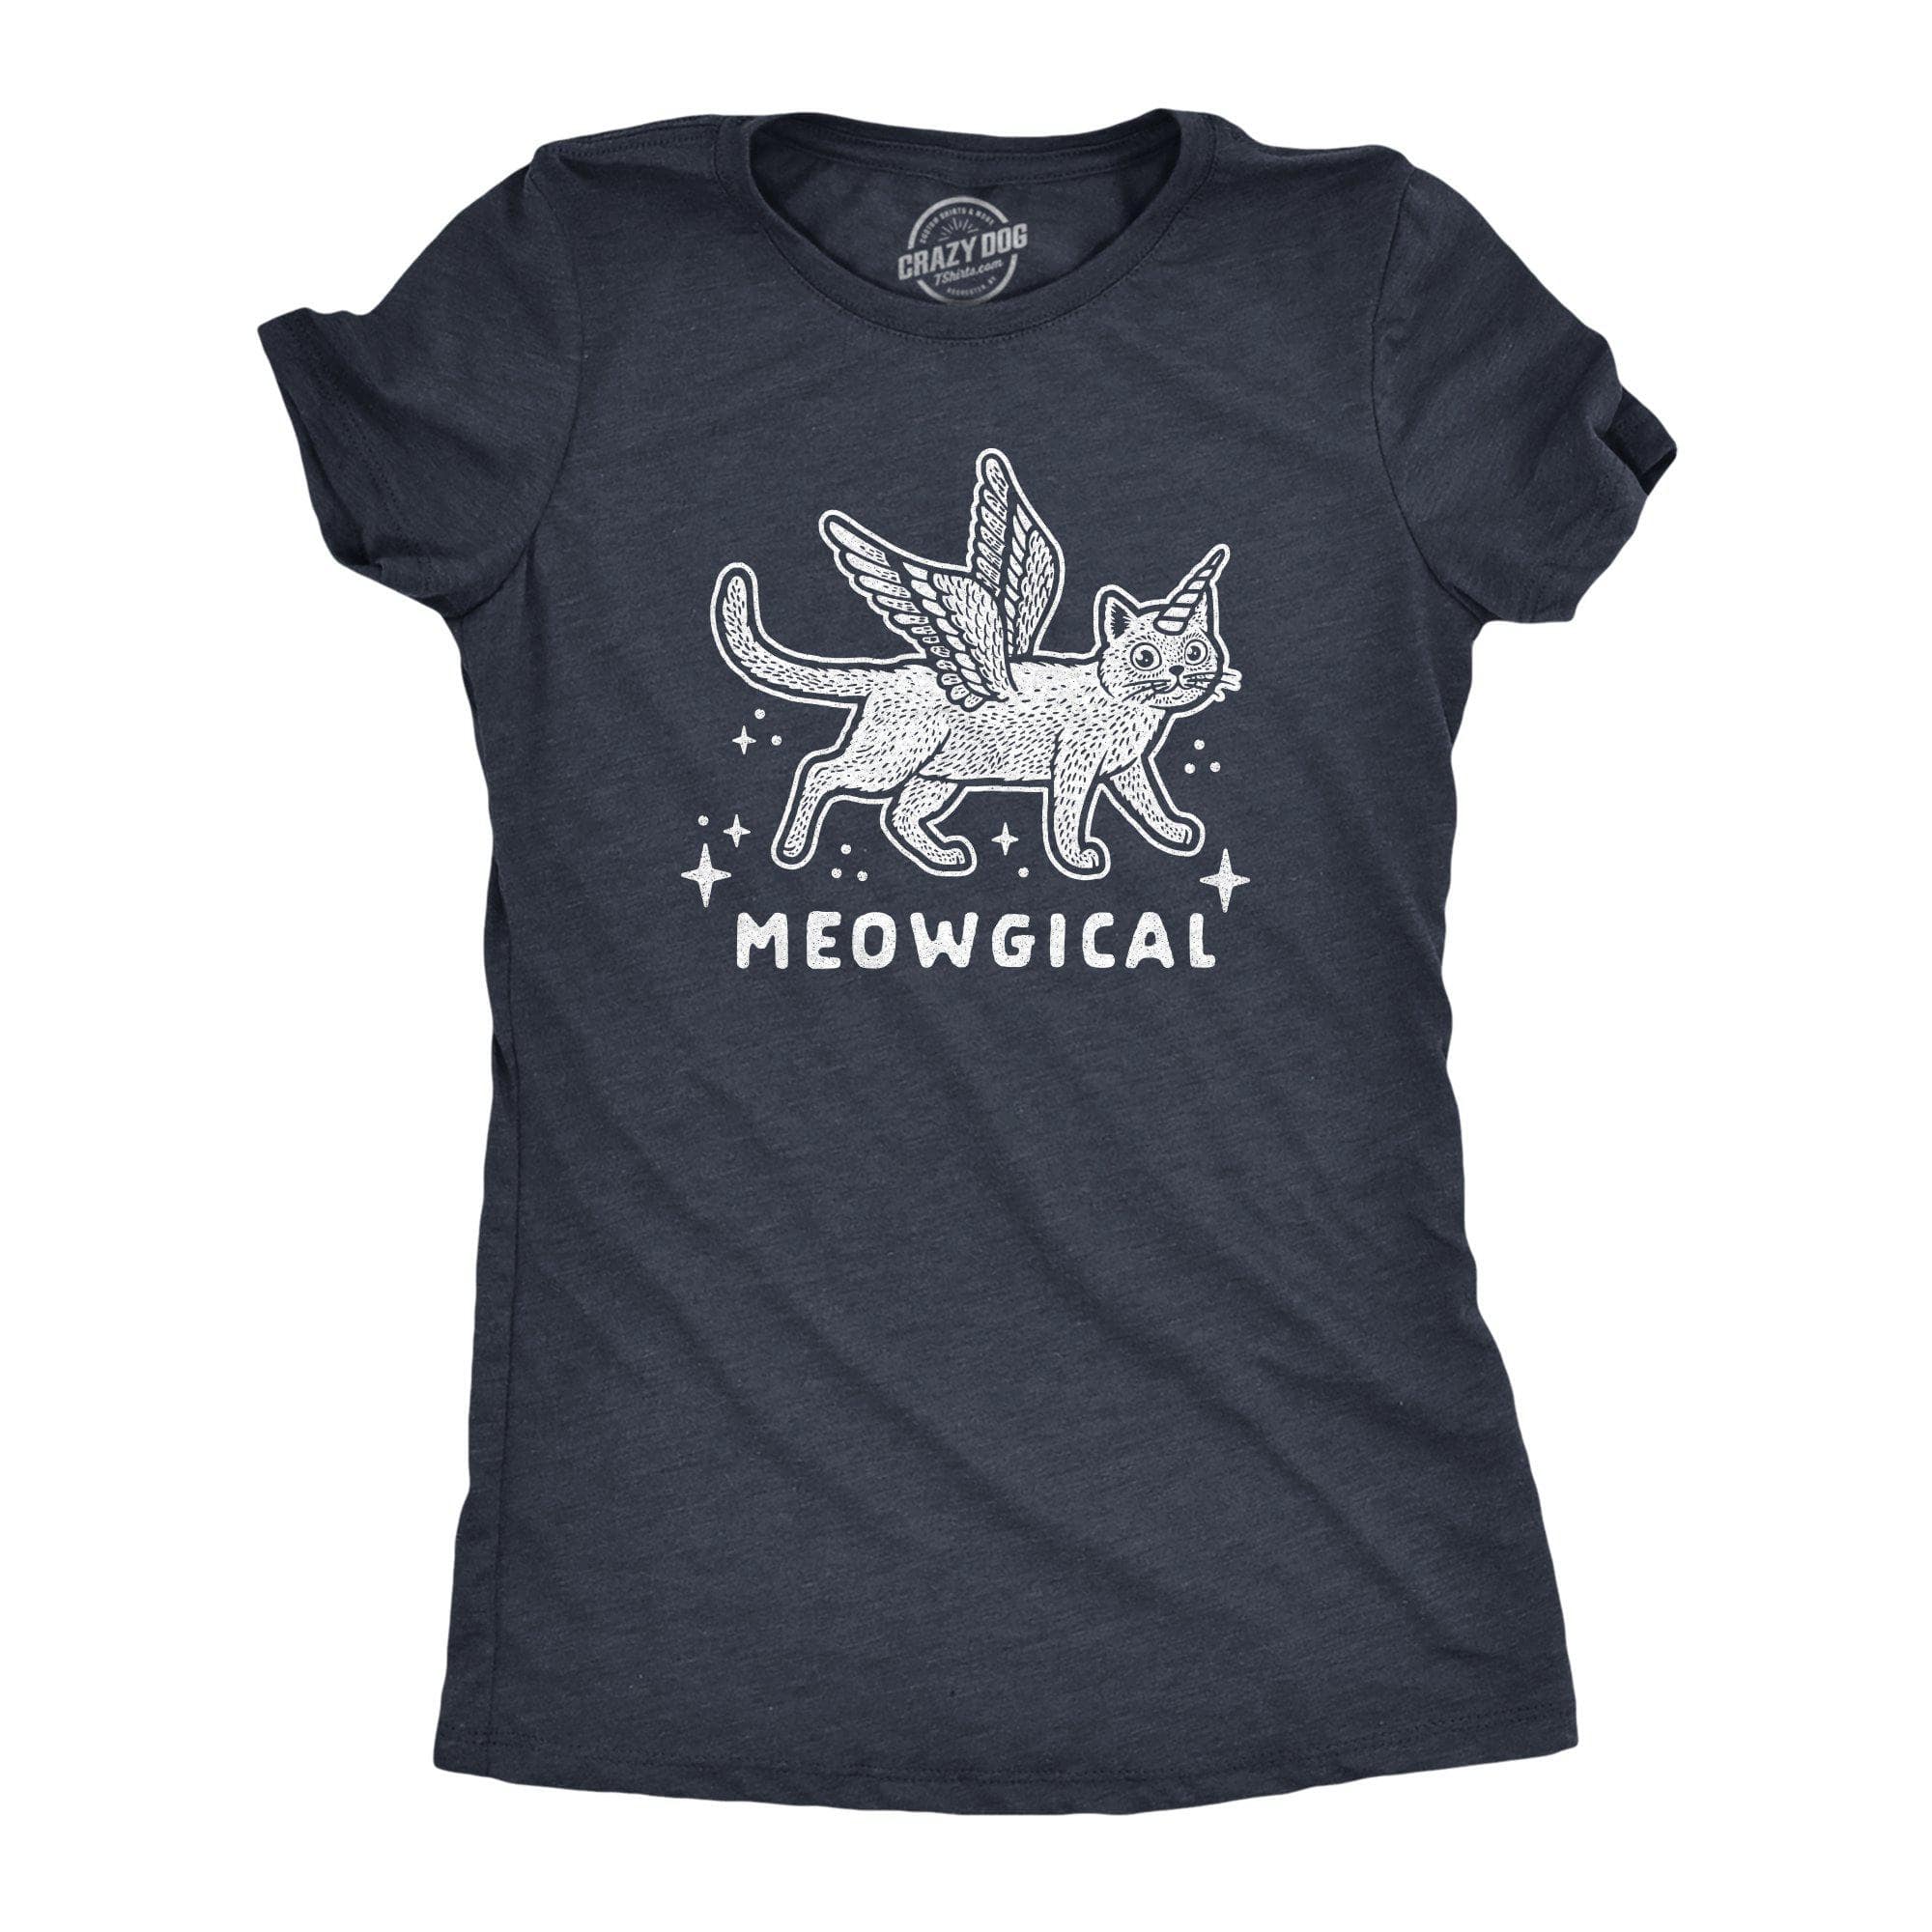 Meowgical Women's Tshirt - Crazy Dog T-Shirts